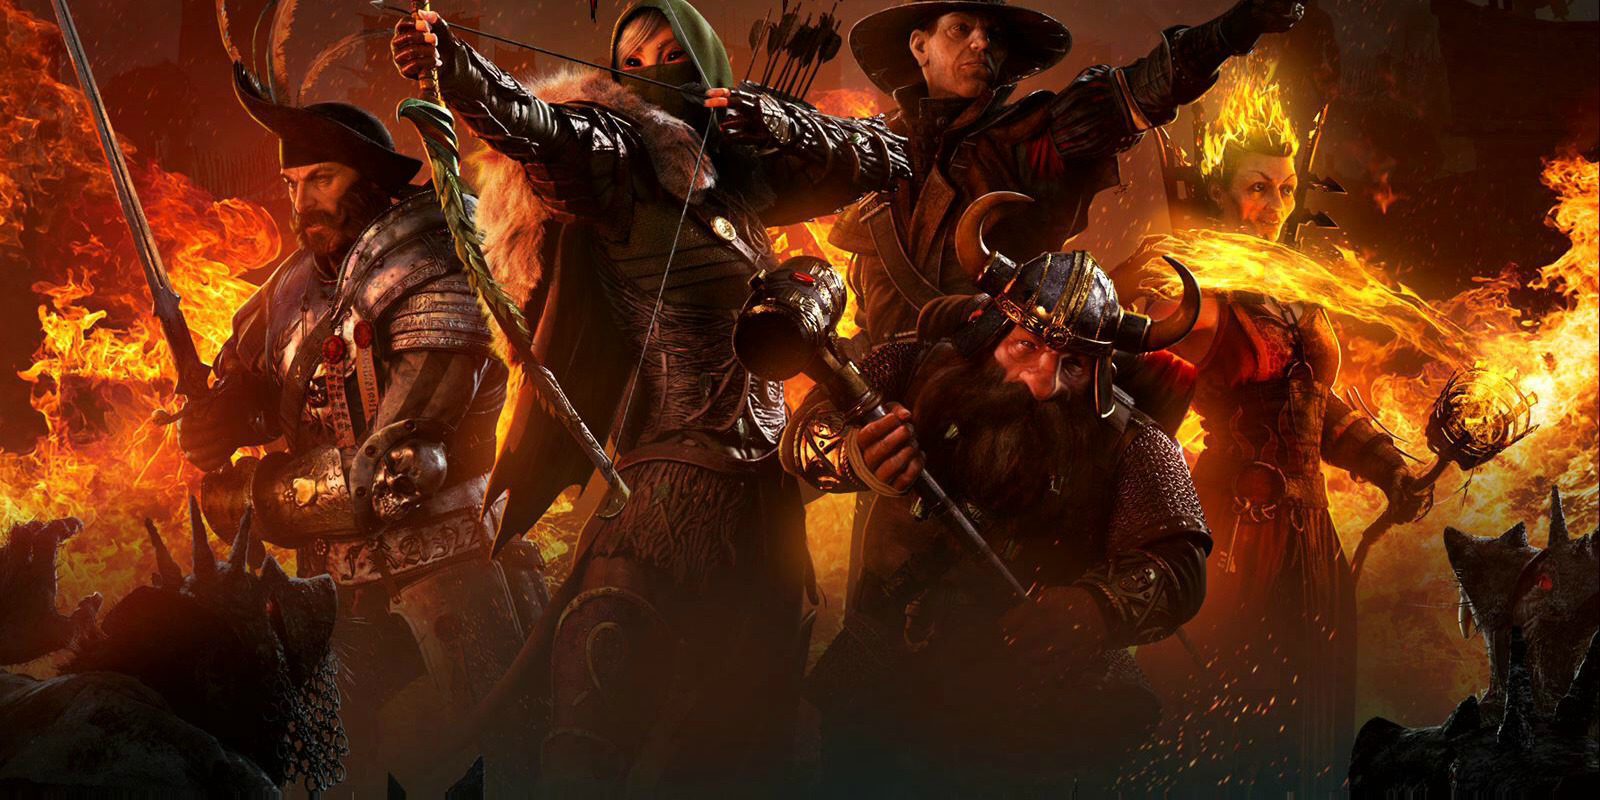 Análisis de 'Warhammer: End Times - Vermintide' para PC, PS4 y Xbox One